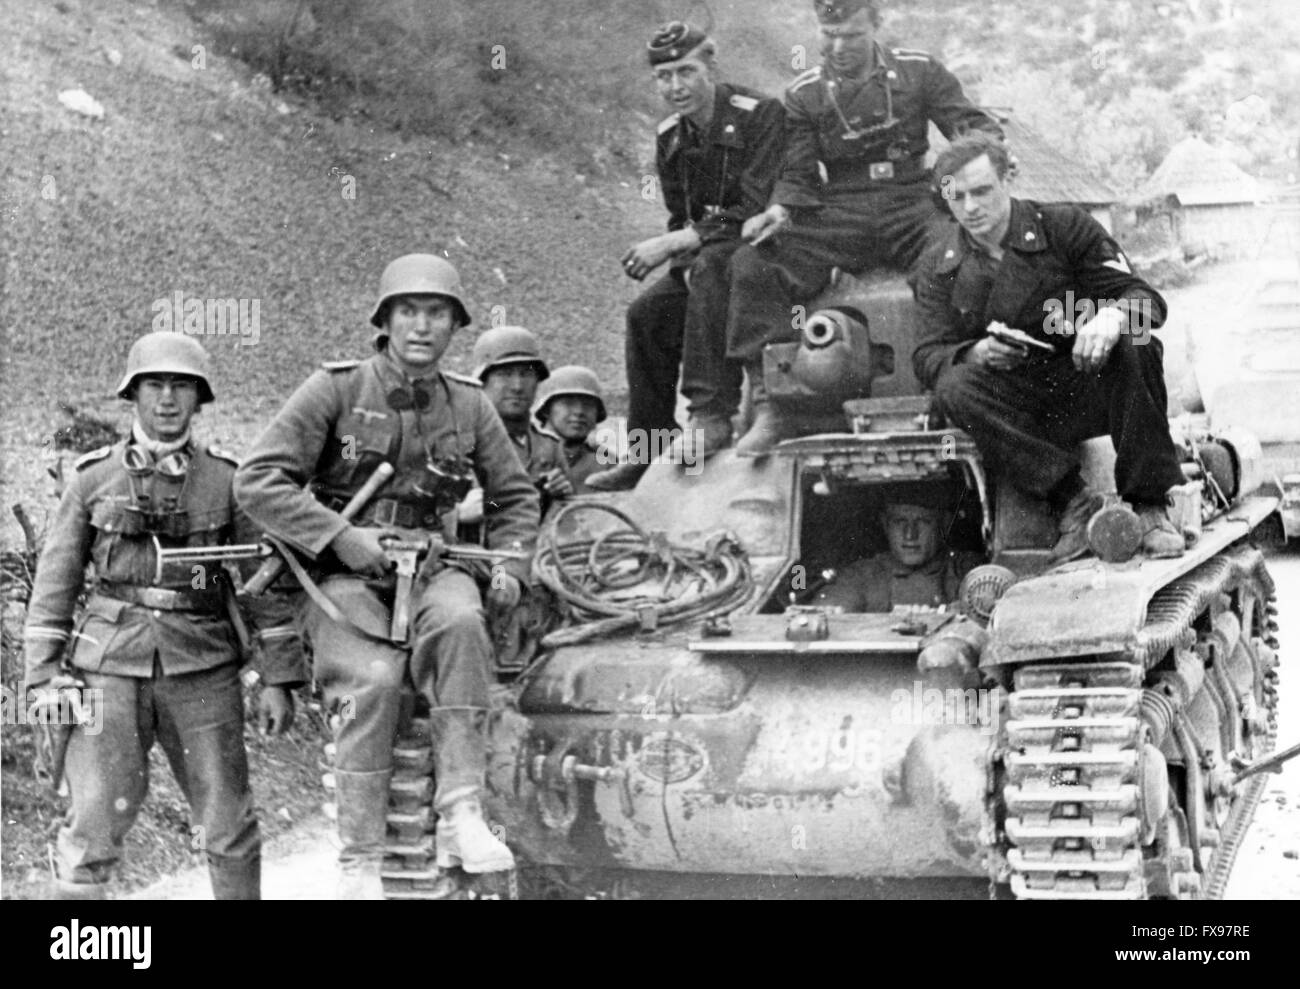 The Nazi propaganda image depicts soldiers of the German Wehrmacht on a captured tank during advance in Yugoslavia in April 1941. Fotoarchiv für Zeitgeschichtee - NO WIRE SERIVCE - Stock Photo